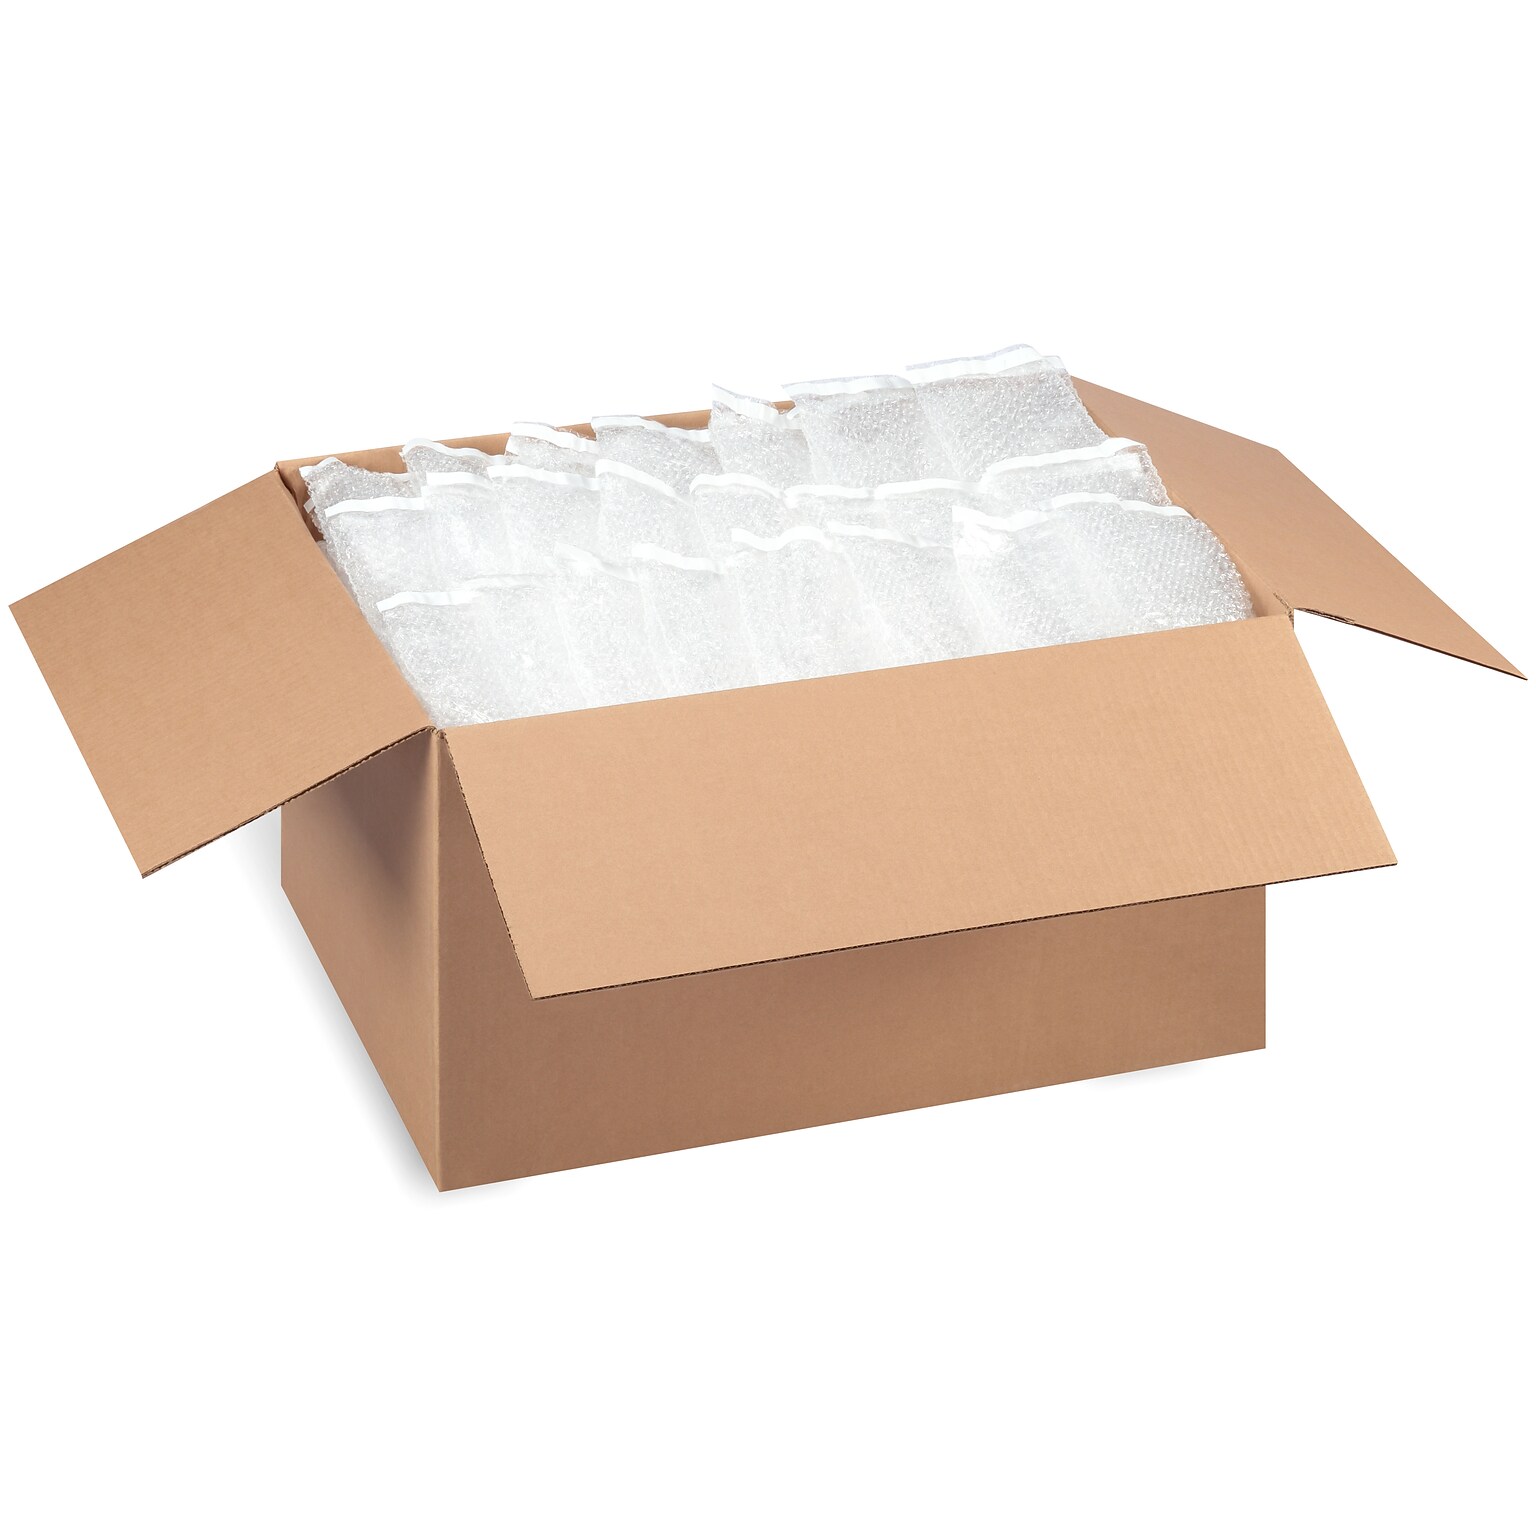 Coastwide Professional™ 5 x 6 Self-Seal 3/16 Bubble Bags, 500/Carton (CW53981)